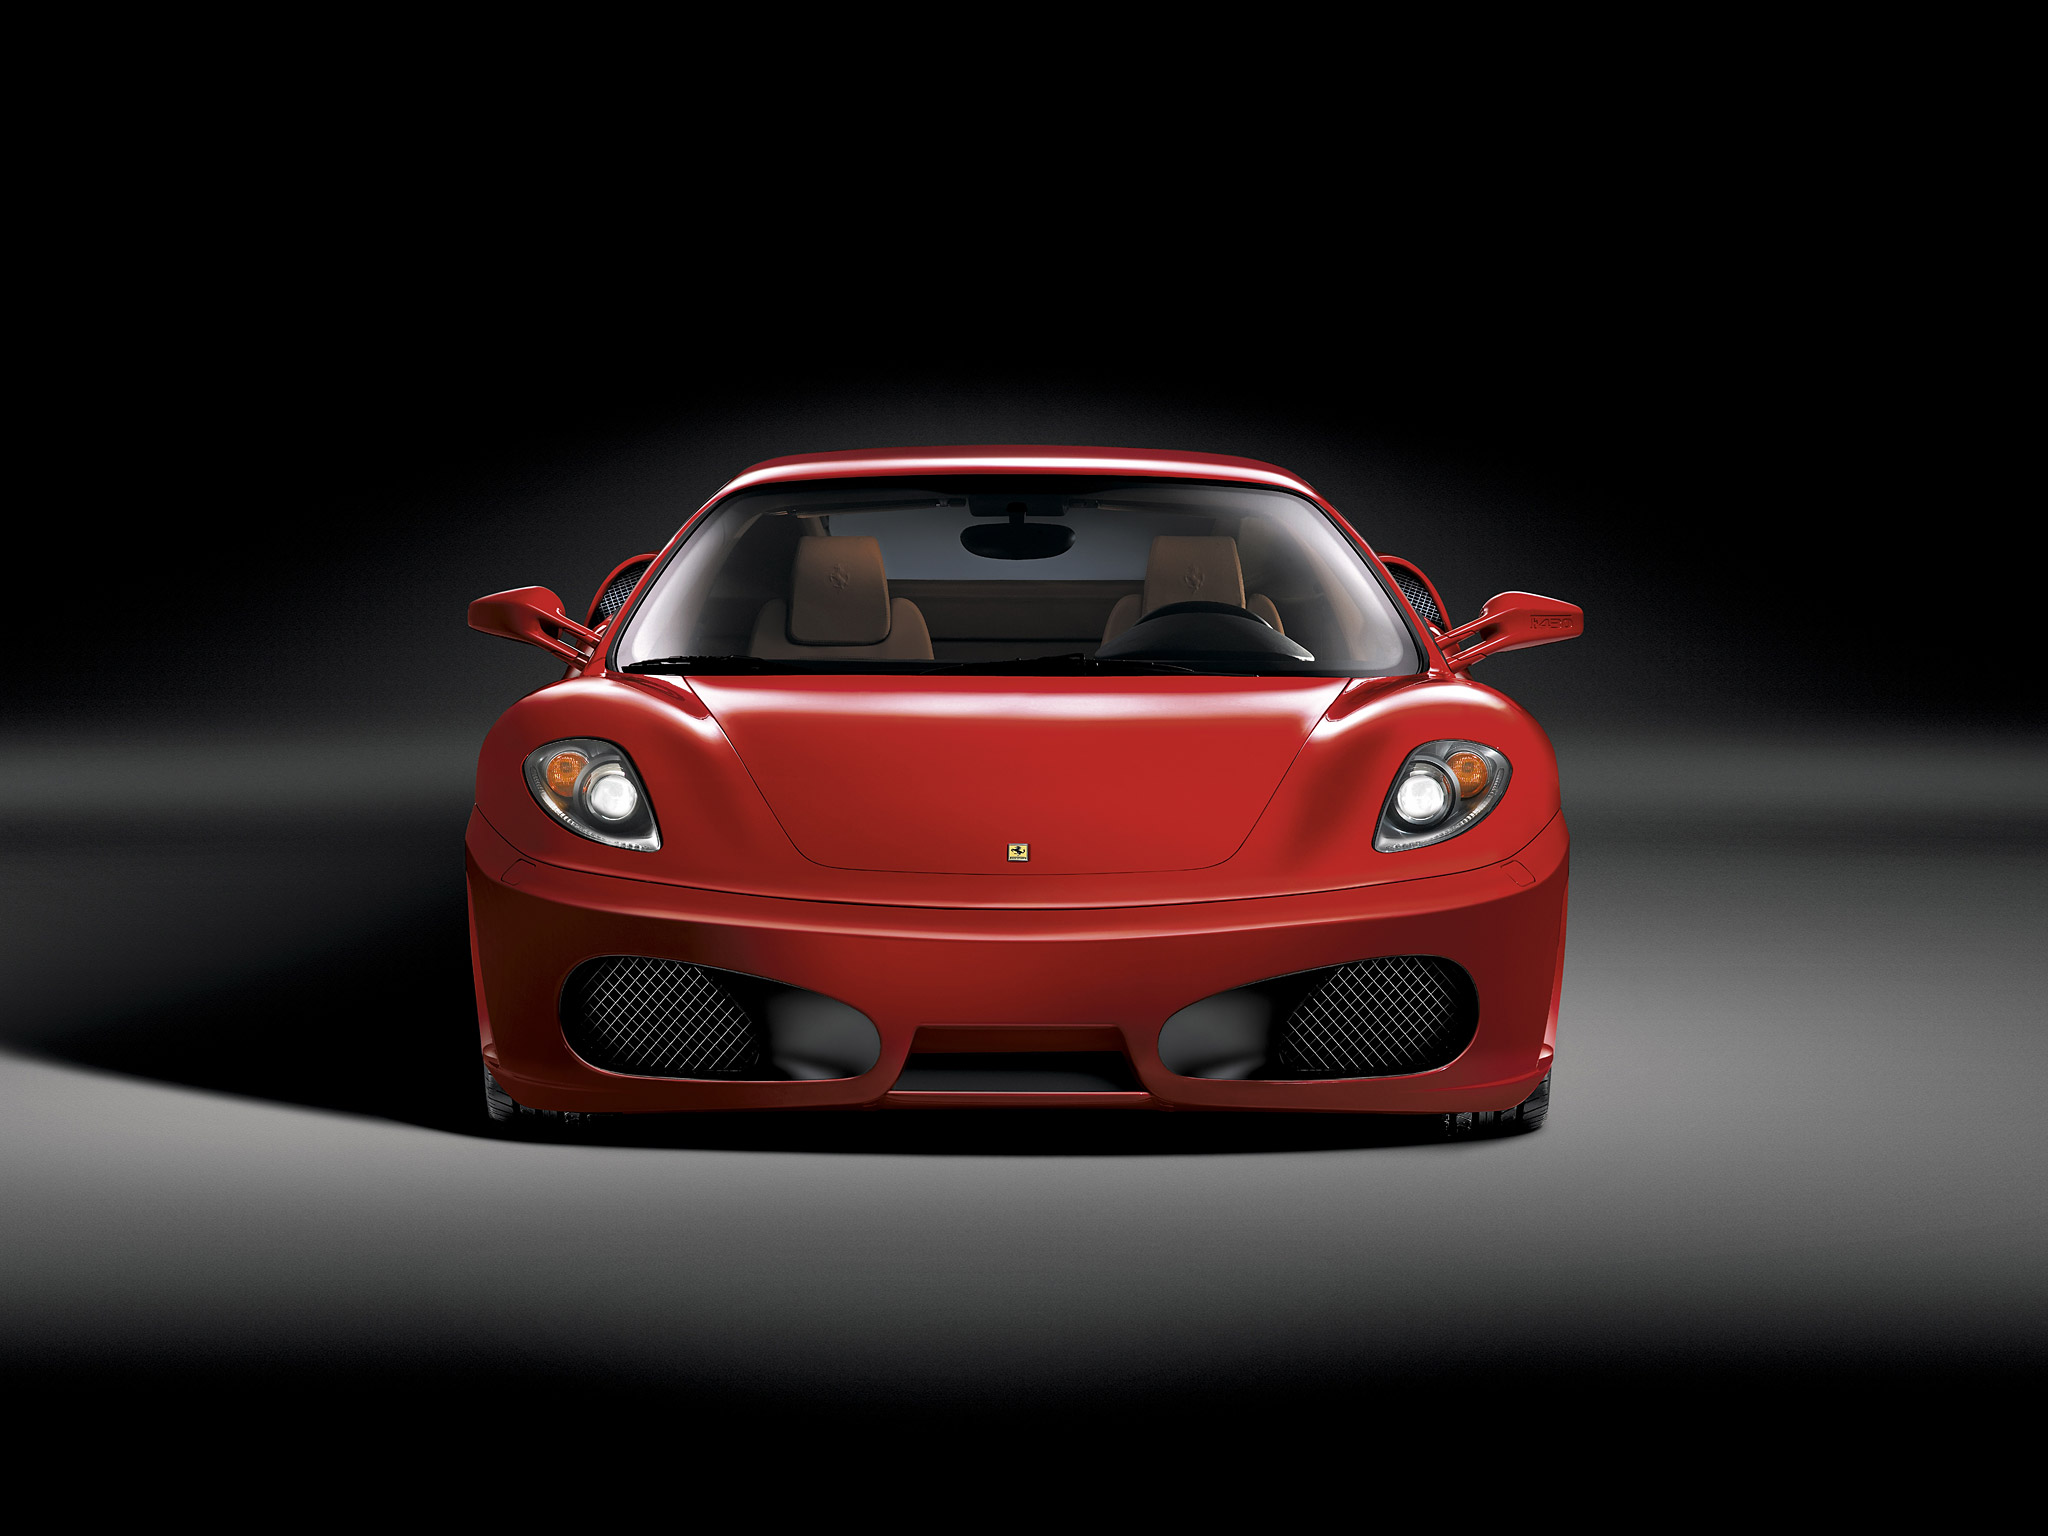  2005 Ferrari F430 Wallpaper.